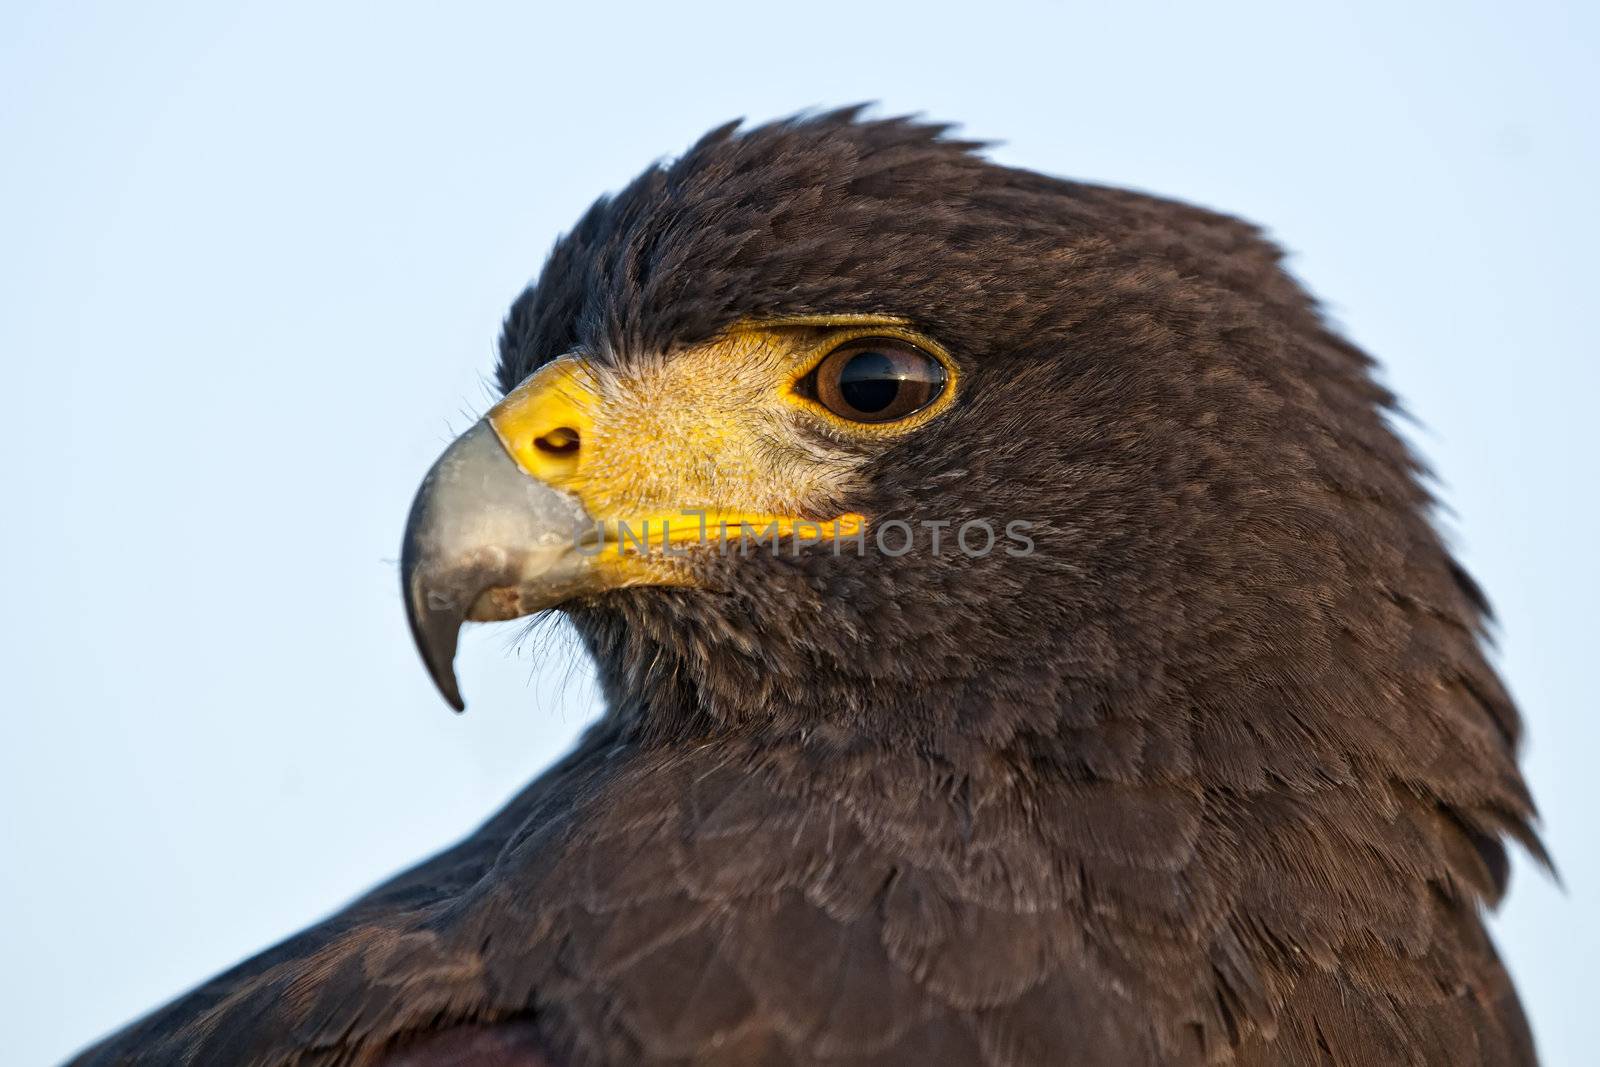 A beautiful Harris Hawk or Parabuteo Unicinctus, also known as the Bay-Winged Hawk or Dusky Hawk.